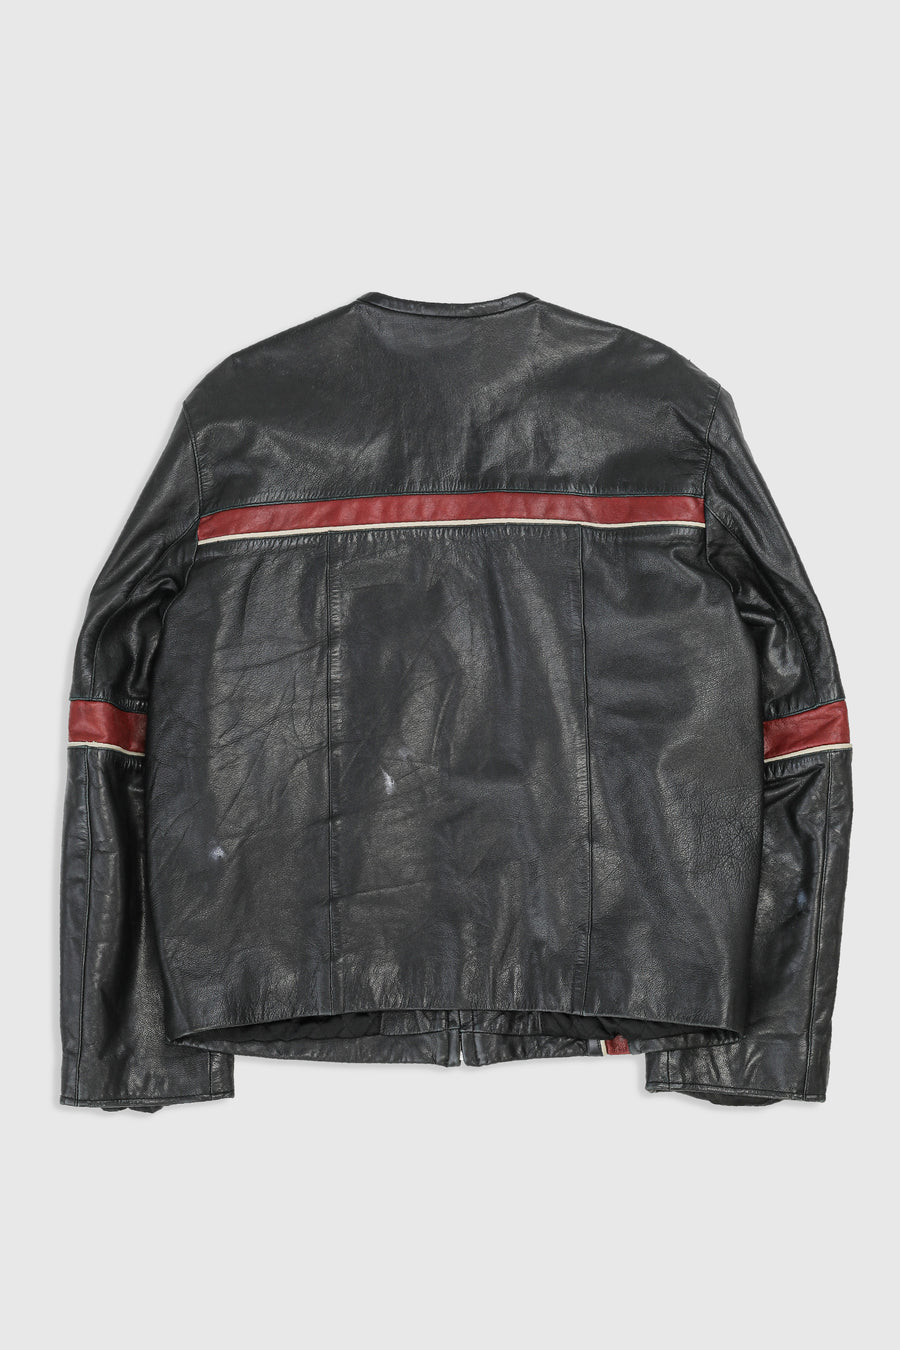 Vintage Racing Leather Jacket - M